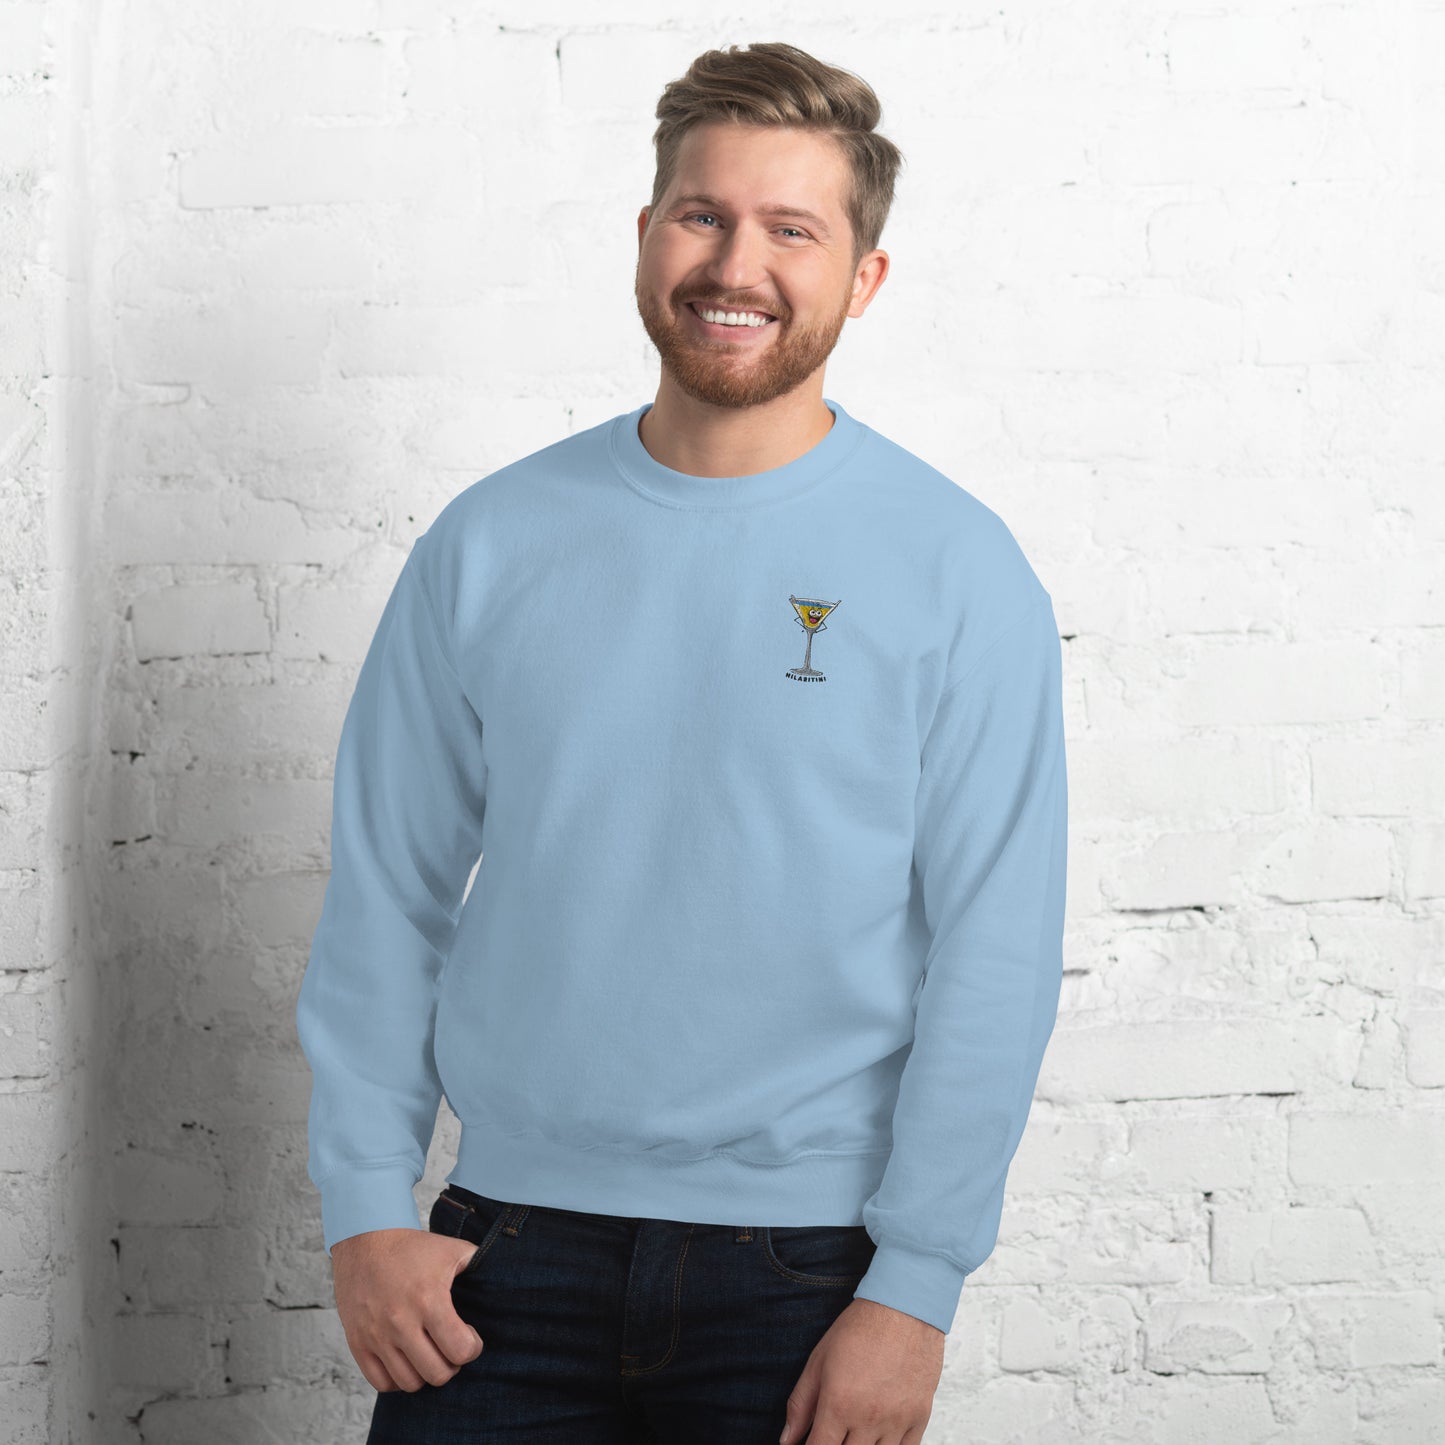 Hilaritini Unisex Embroidered Sweatshirt